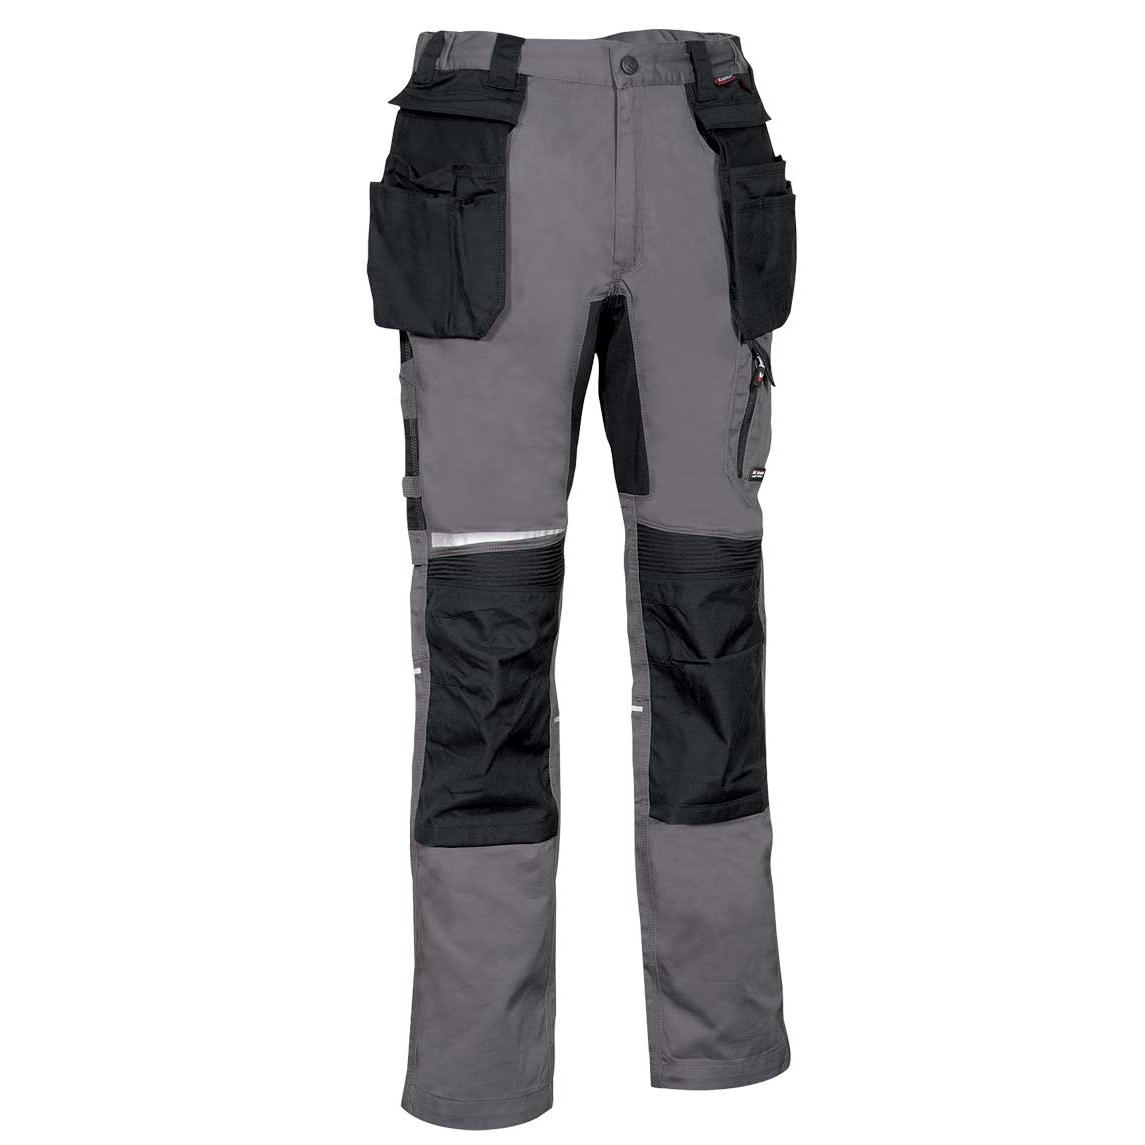 Pantaloni Cofra Lemno: elasticizzati e confortevoli